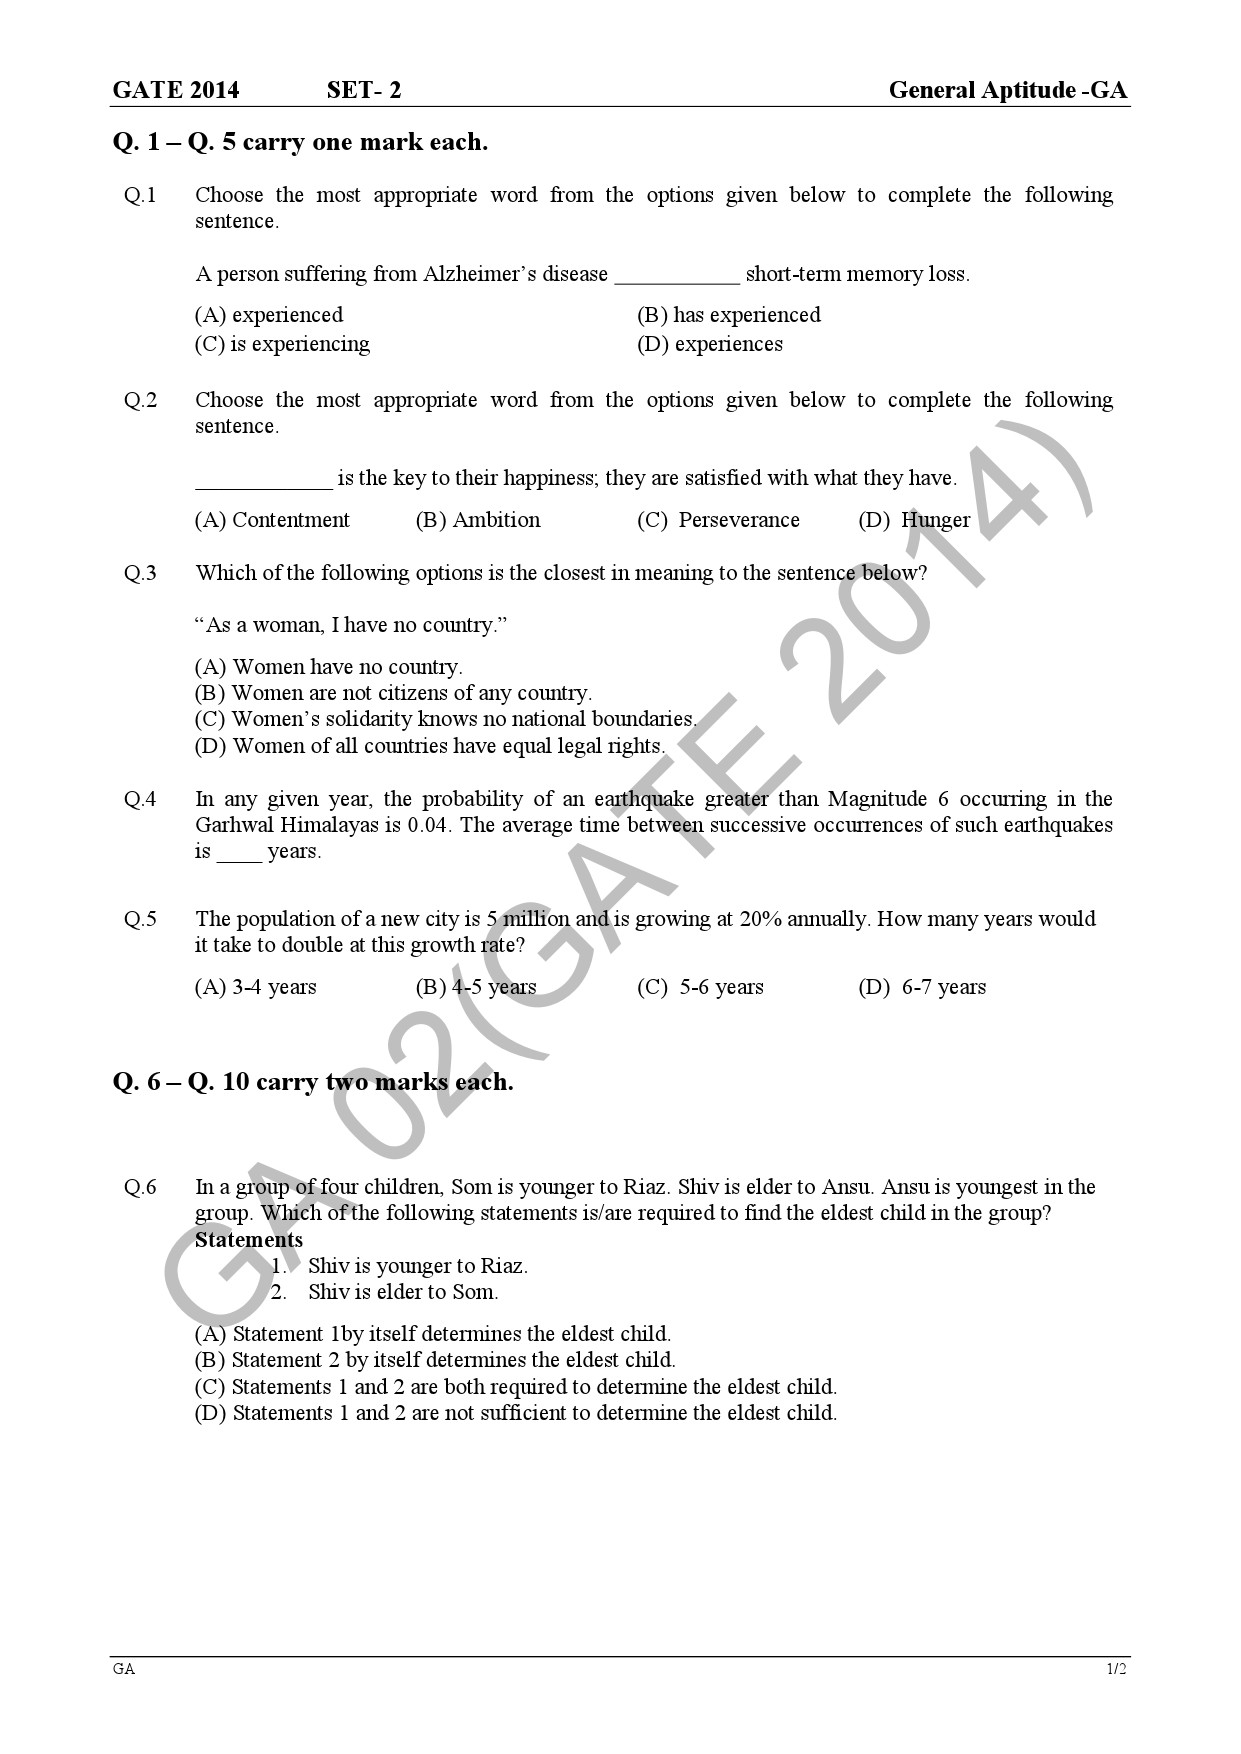 GATE Exam Question Paper 2014 Life Sciences 5